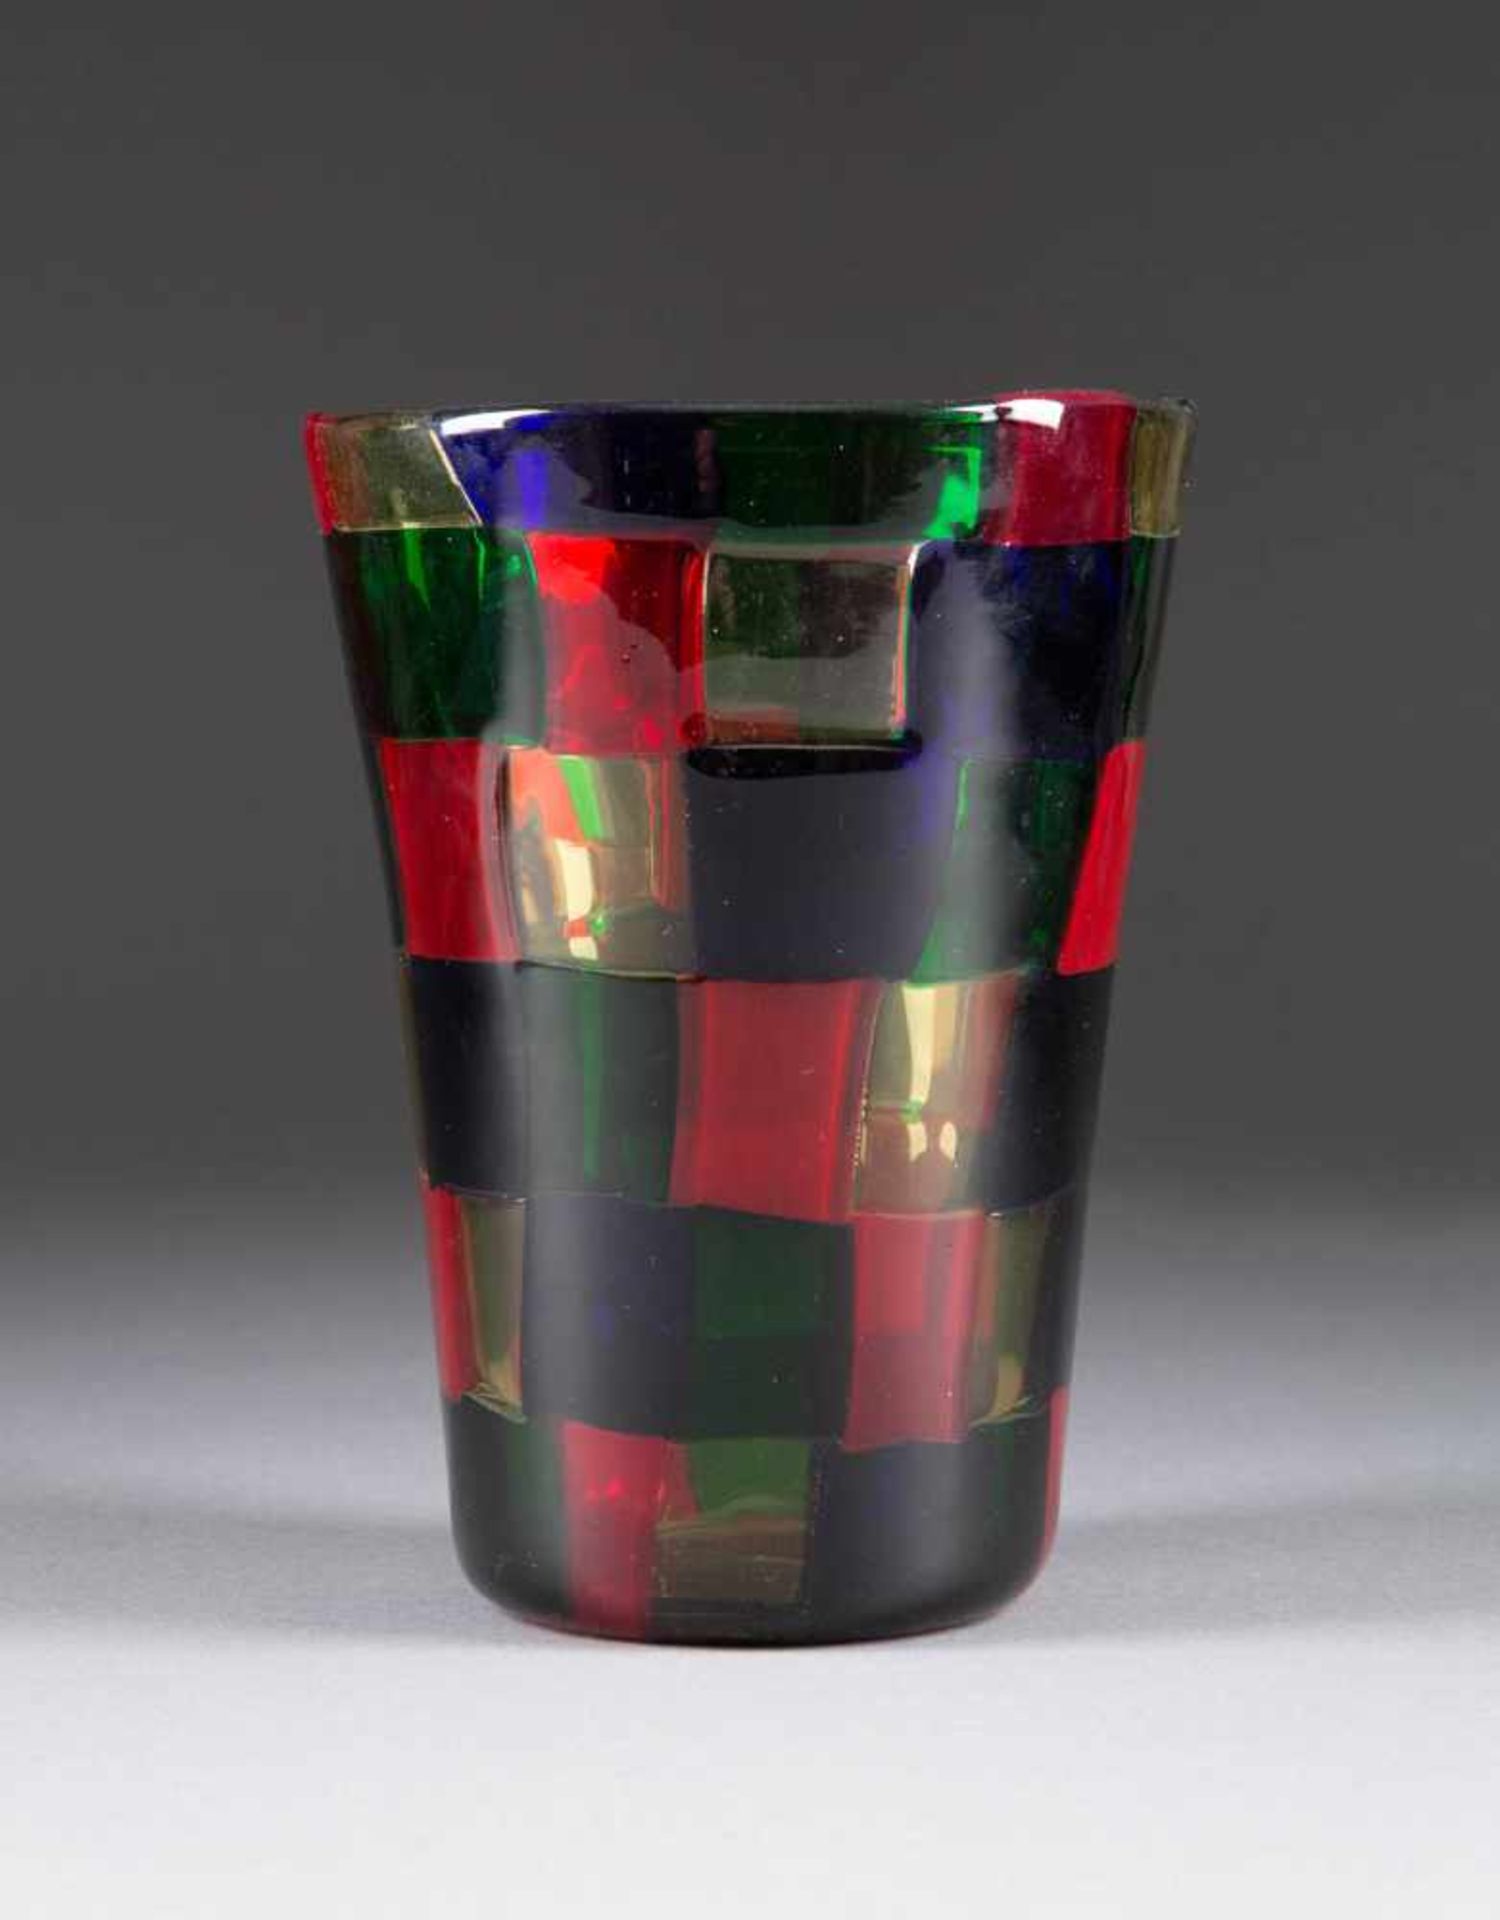 FULVIO BIANCONI 1915 Padua - 1996 Mailand VASE 'PEZZATO' Farbloses Glas mit dicht aufgeschmolzenen